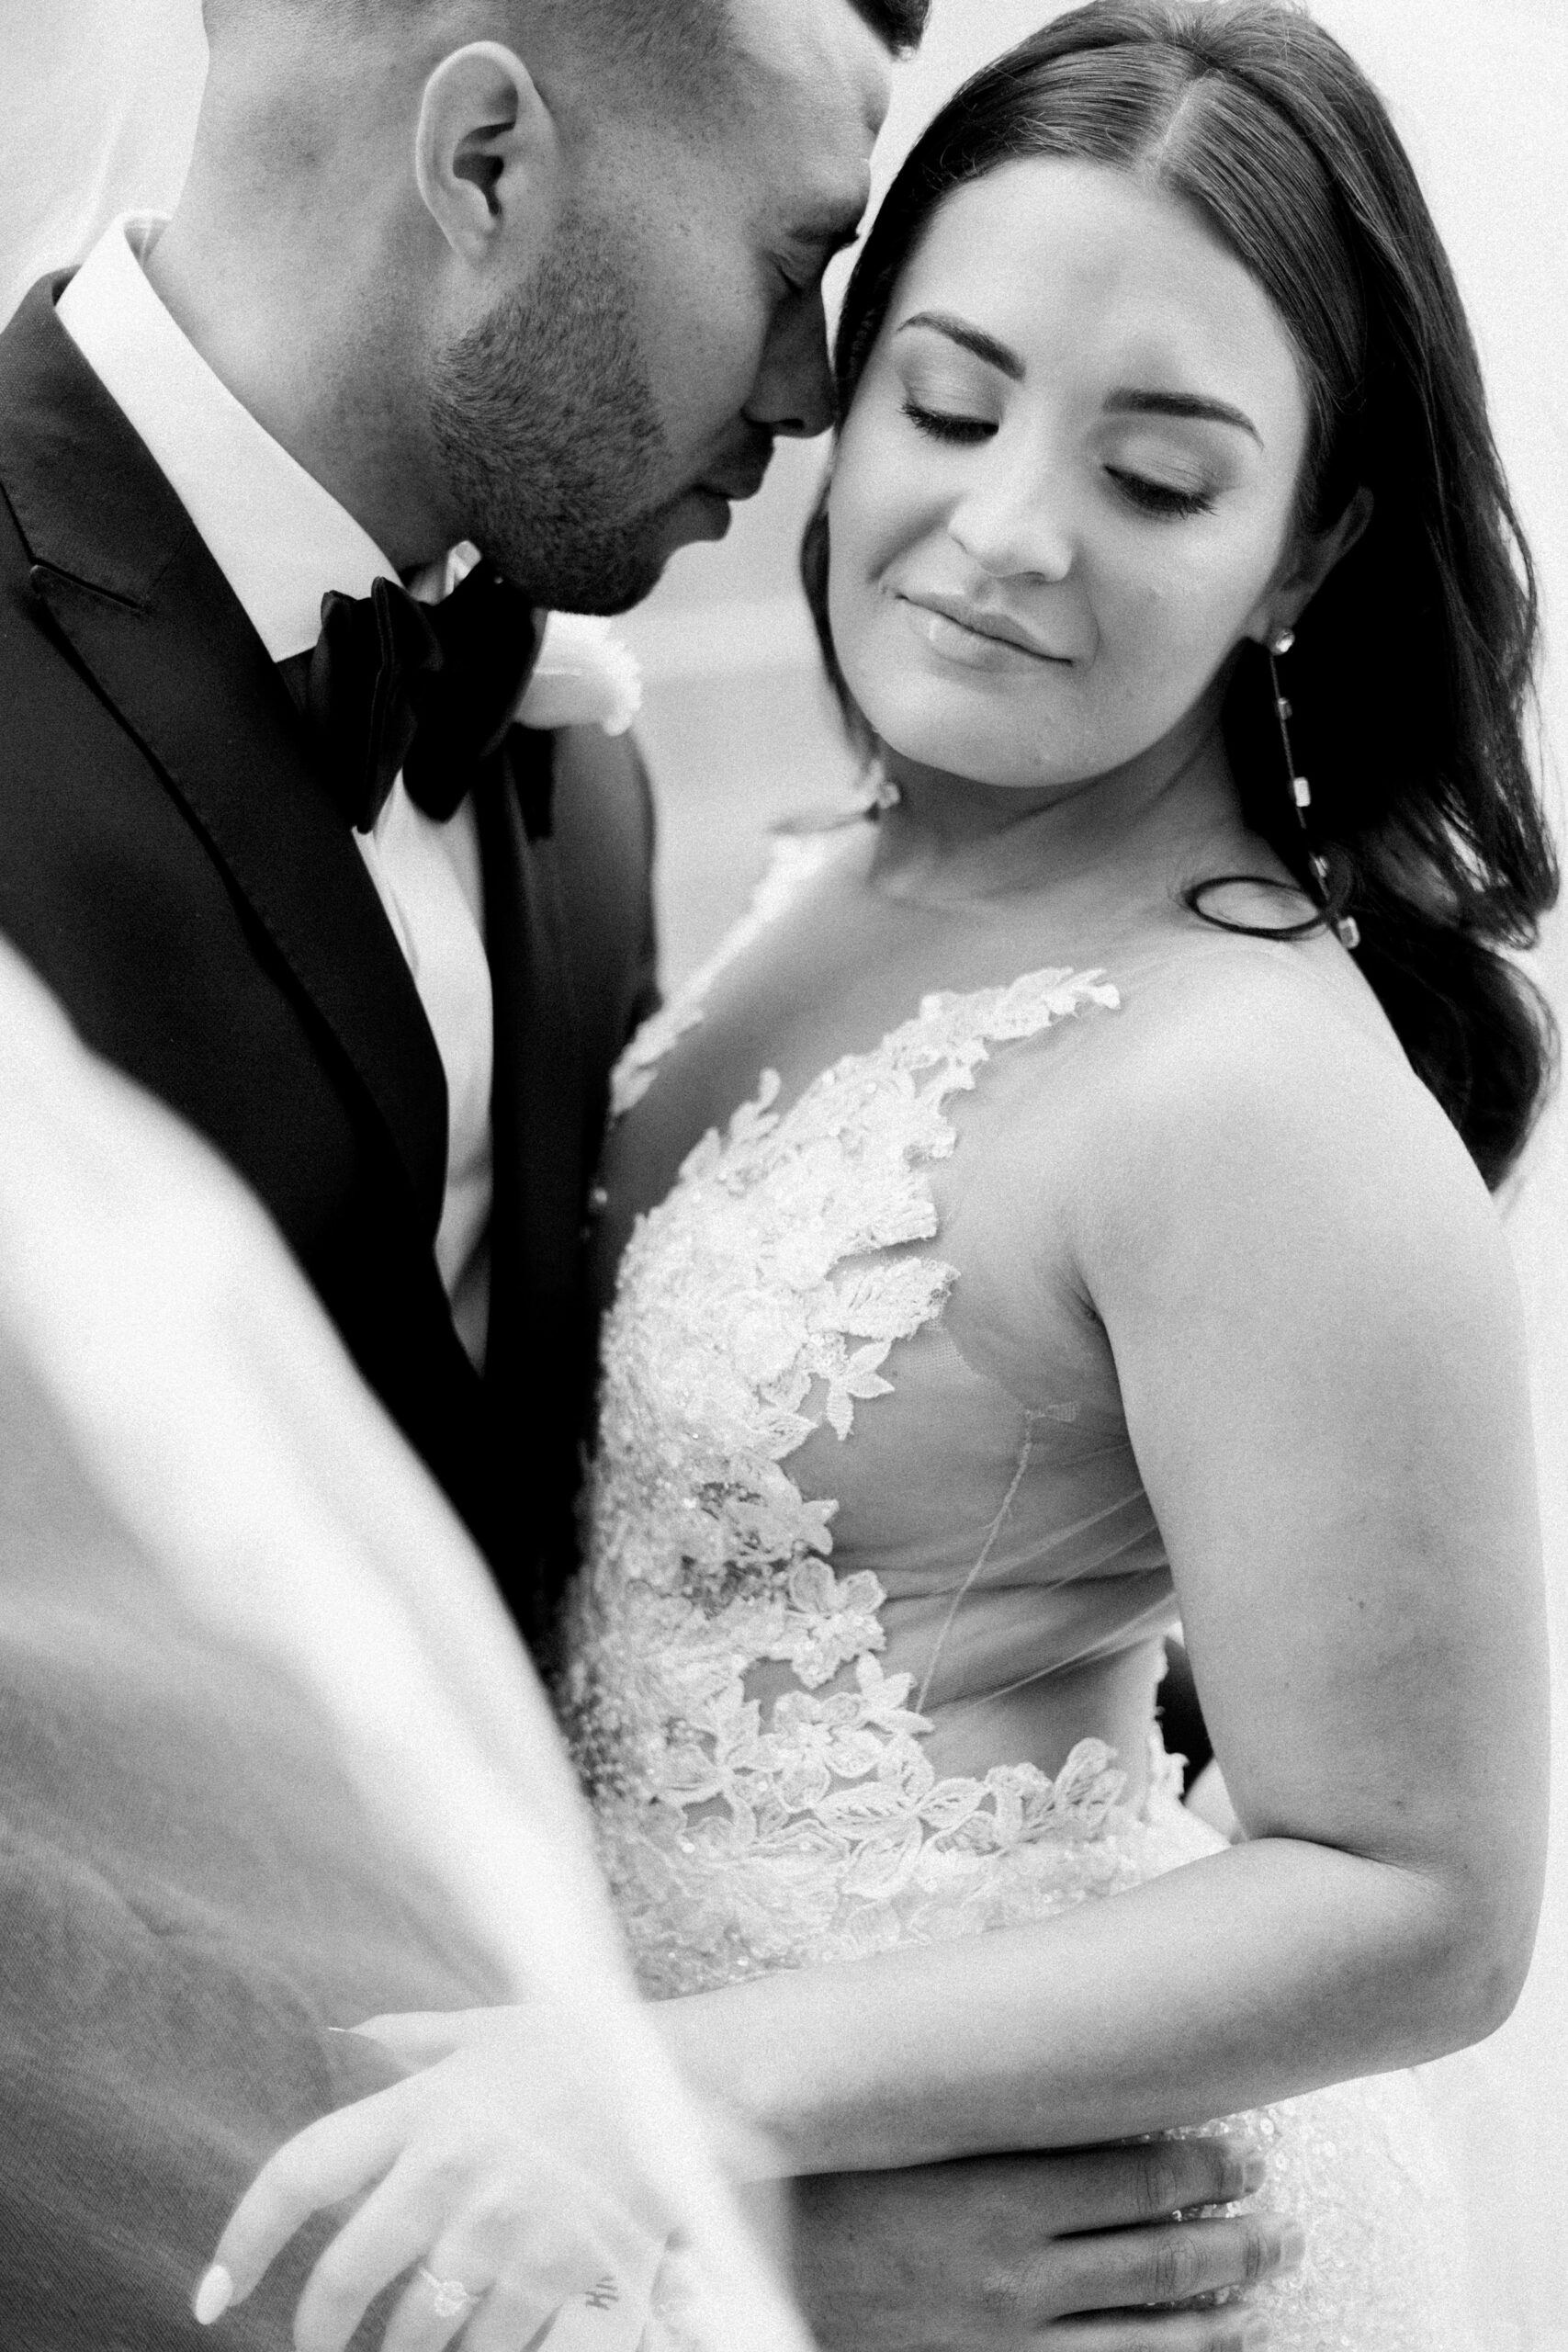 Baltimore Wedding Photographer Capturing Love and Romance